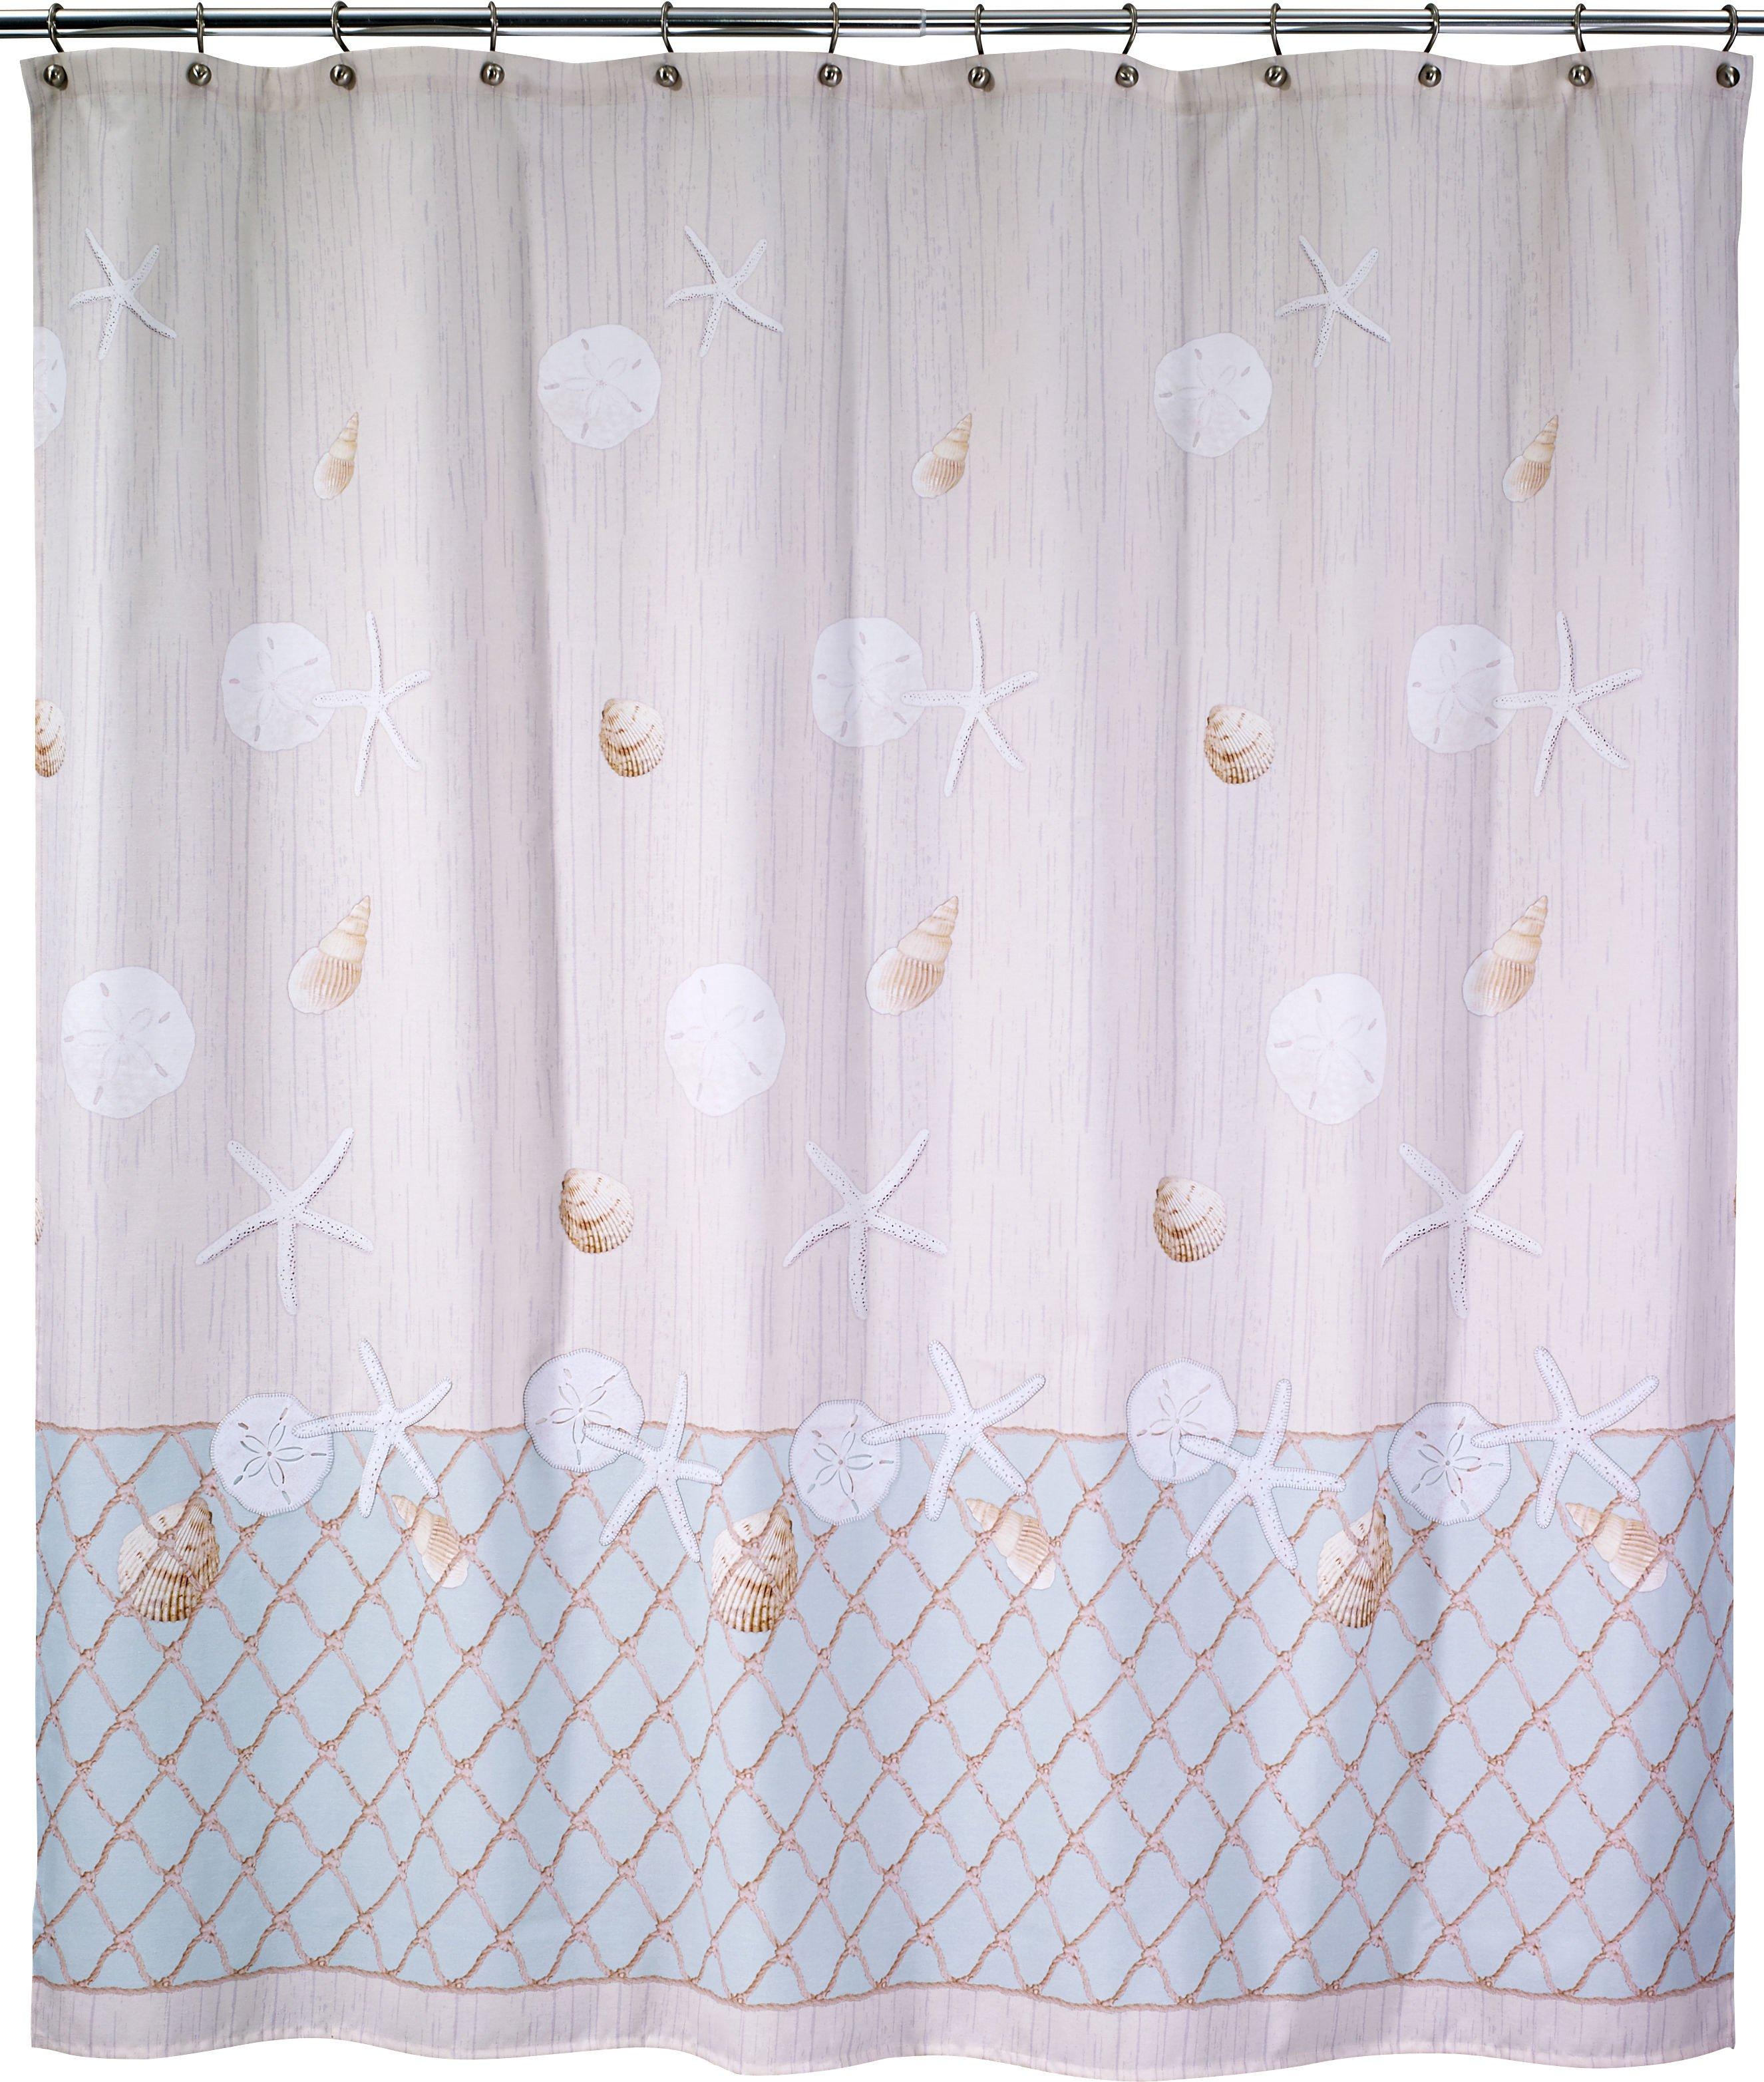 Seaglass Shower Curtain